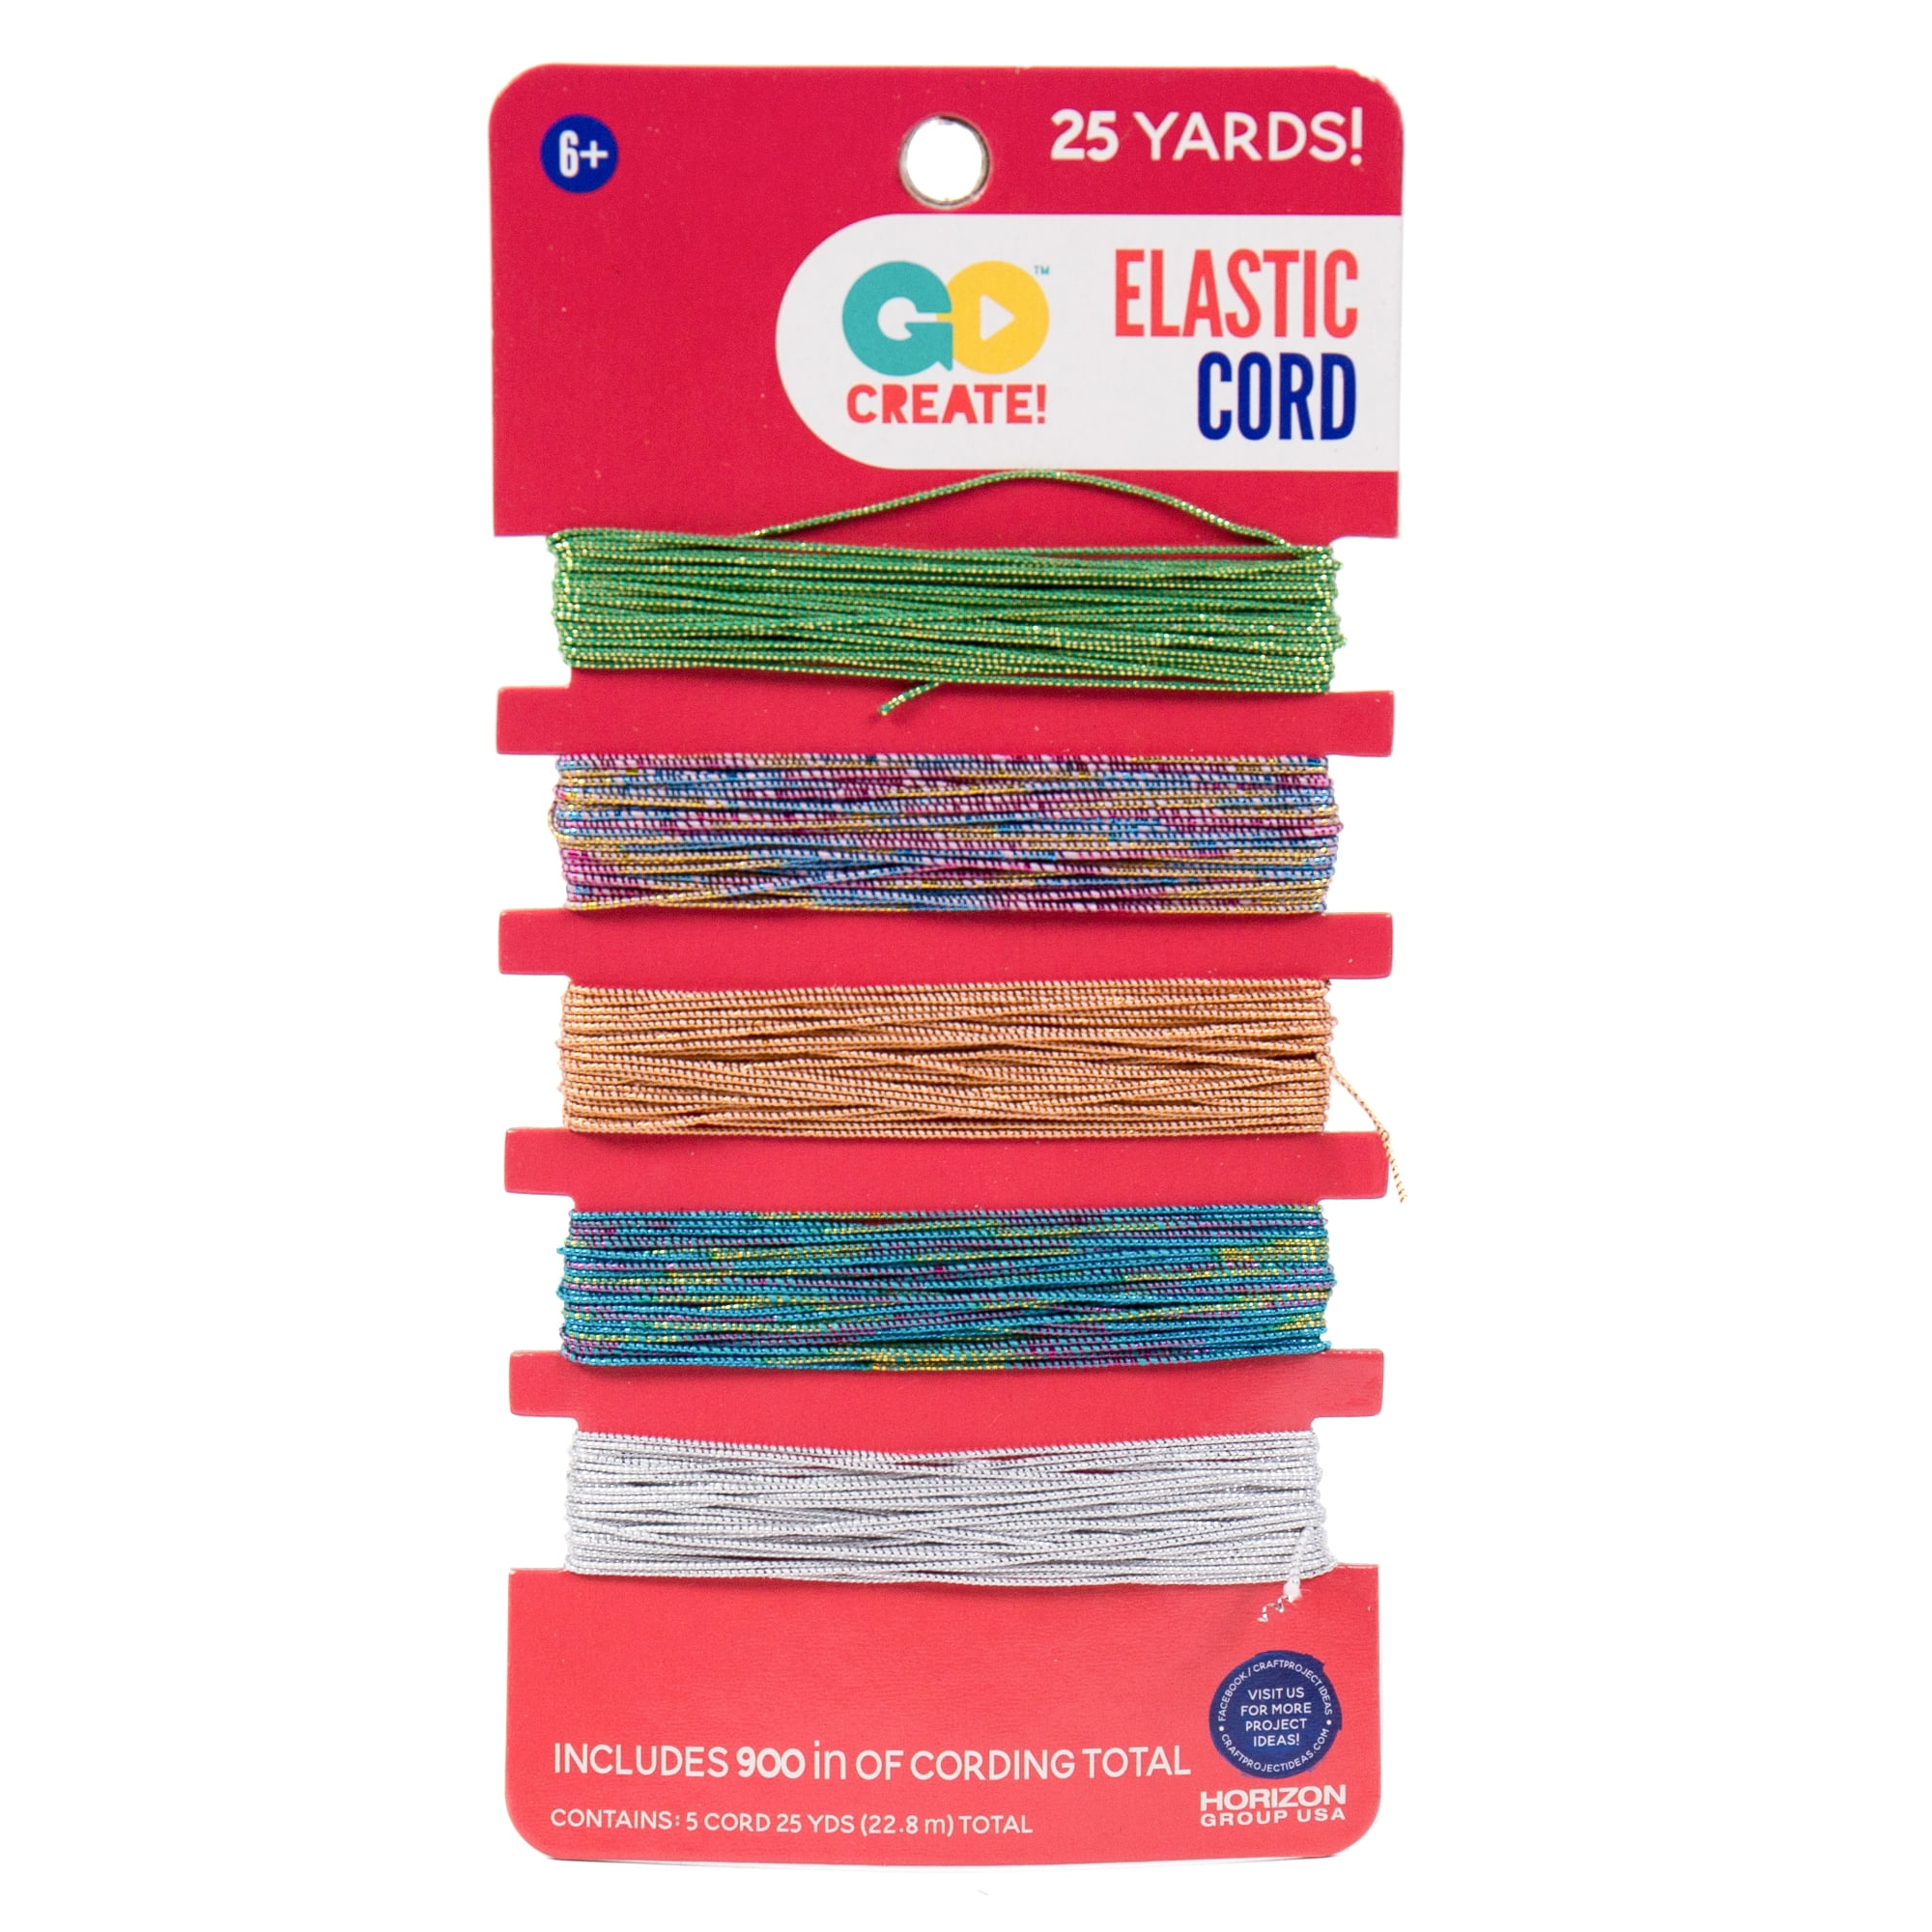 Go Create Sparkly & Colorful Elastic Cords, 25 ft., Multi-Color Cords